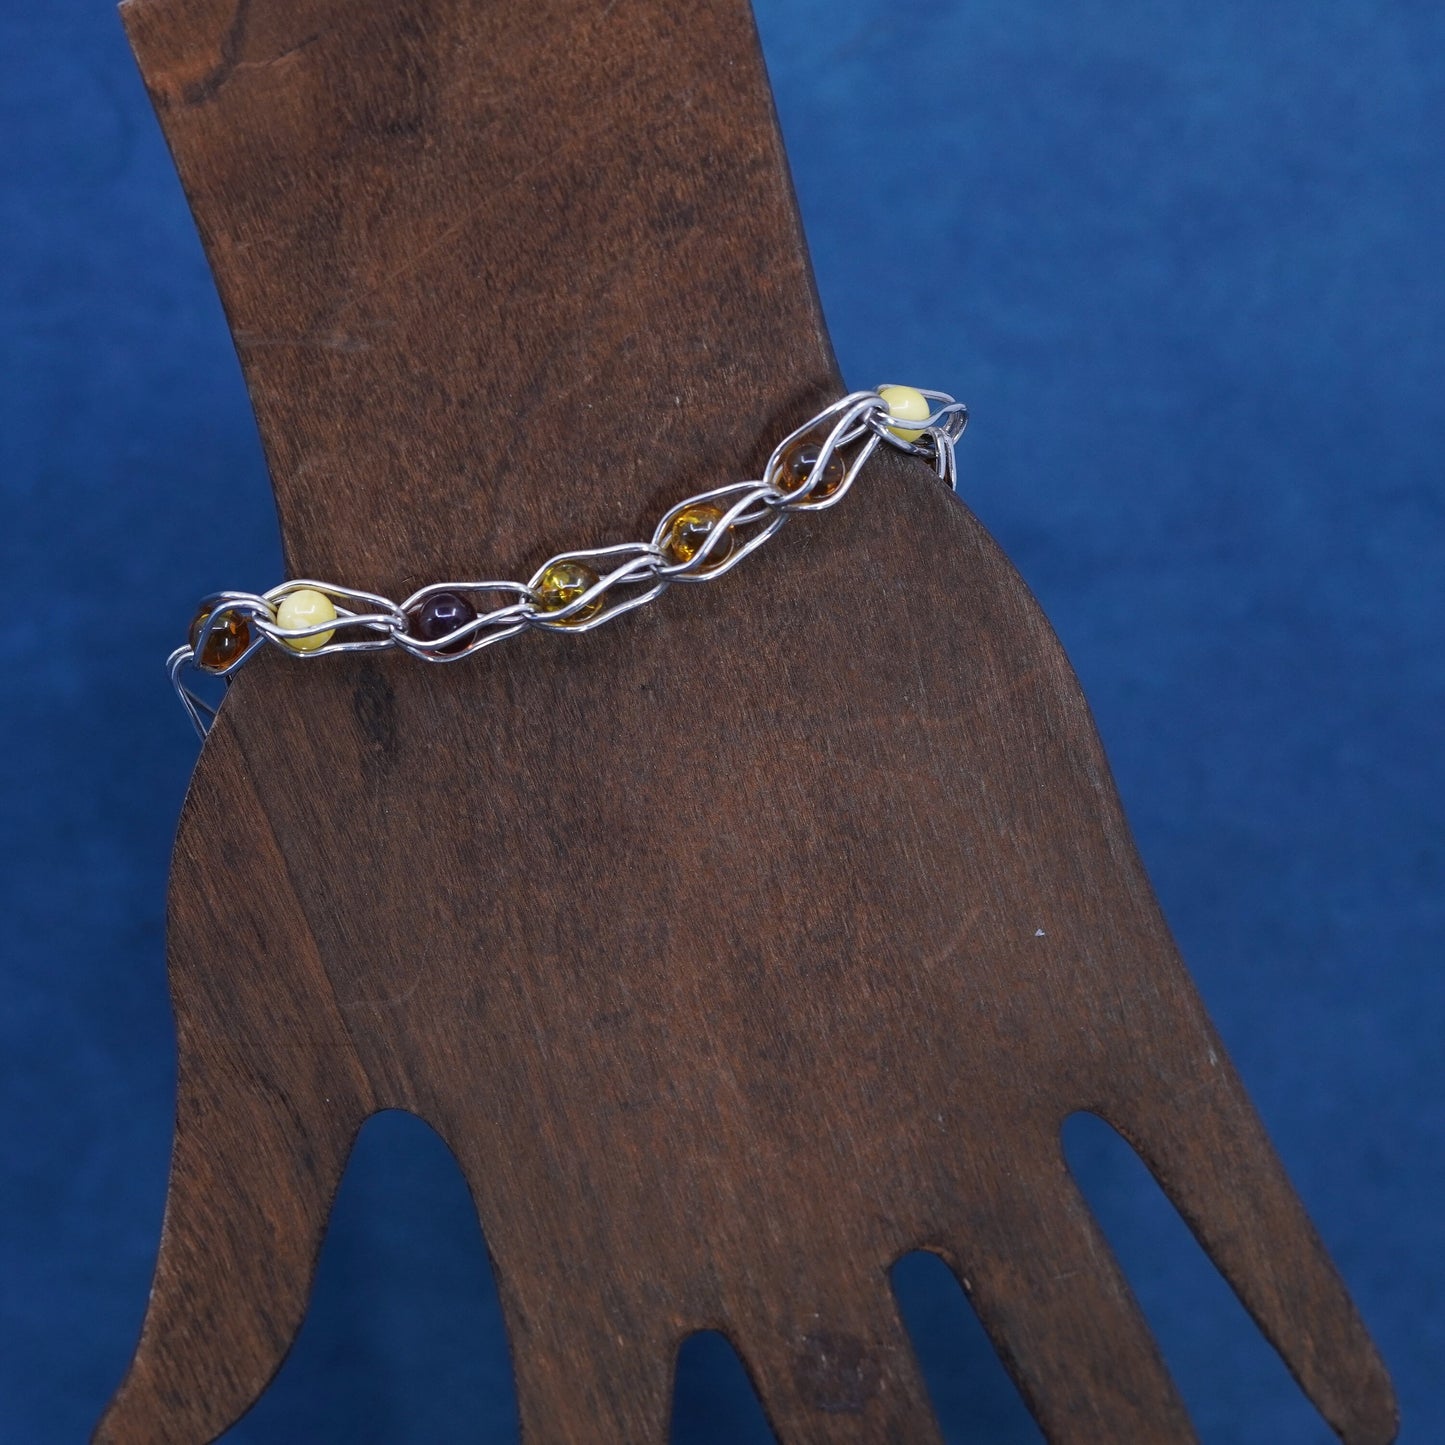 7.5”, vintage sterling silver 925 handmade bracelet with amber beads